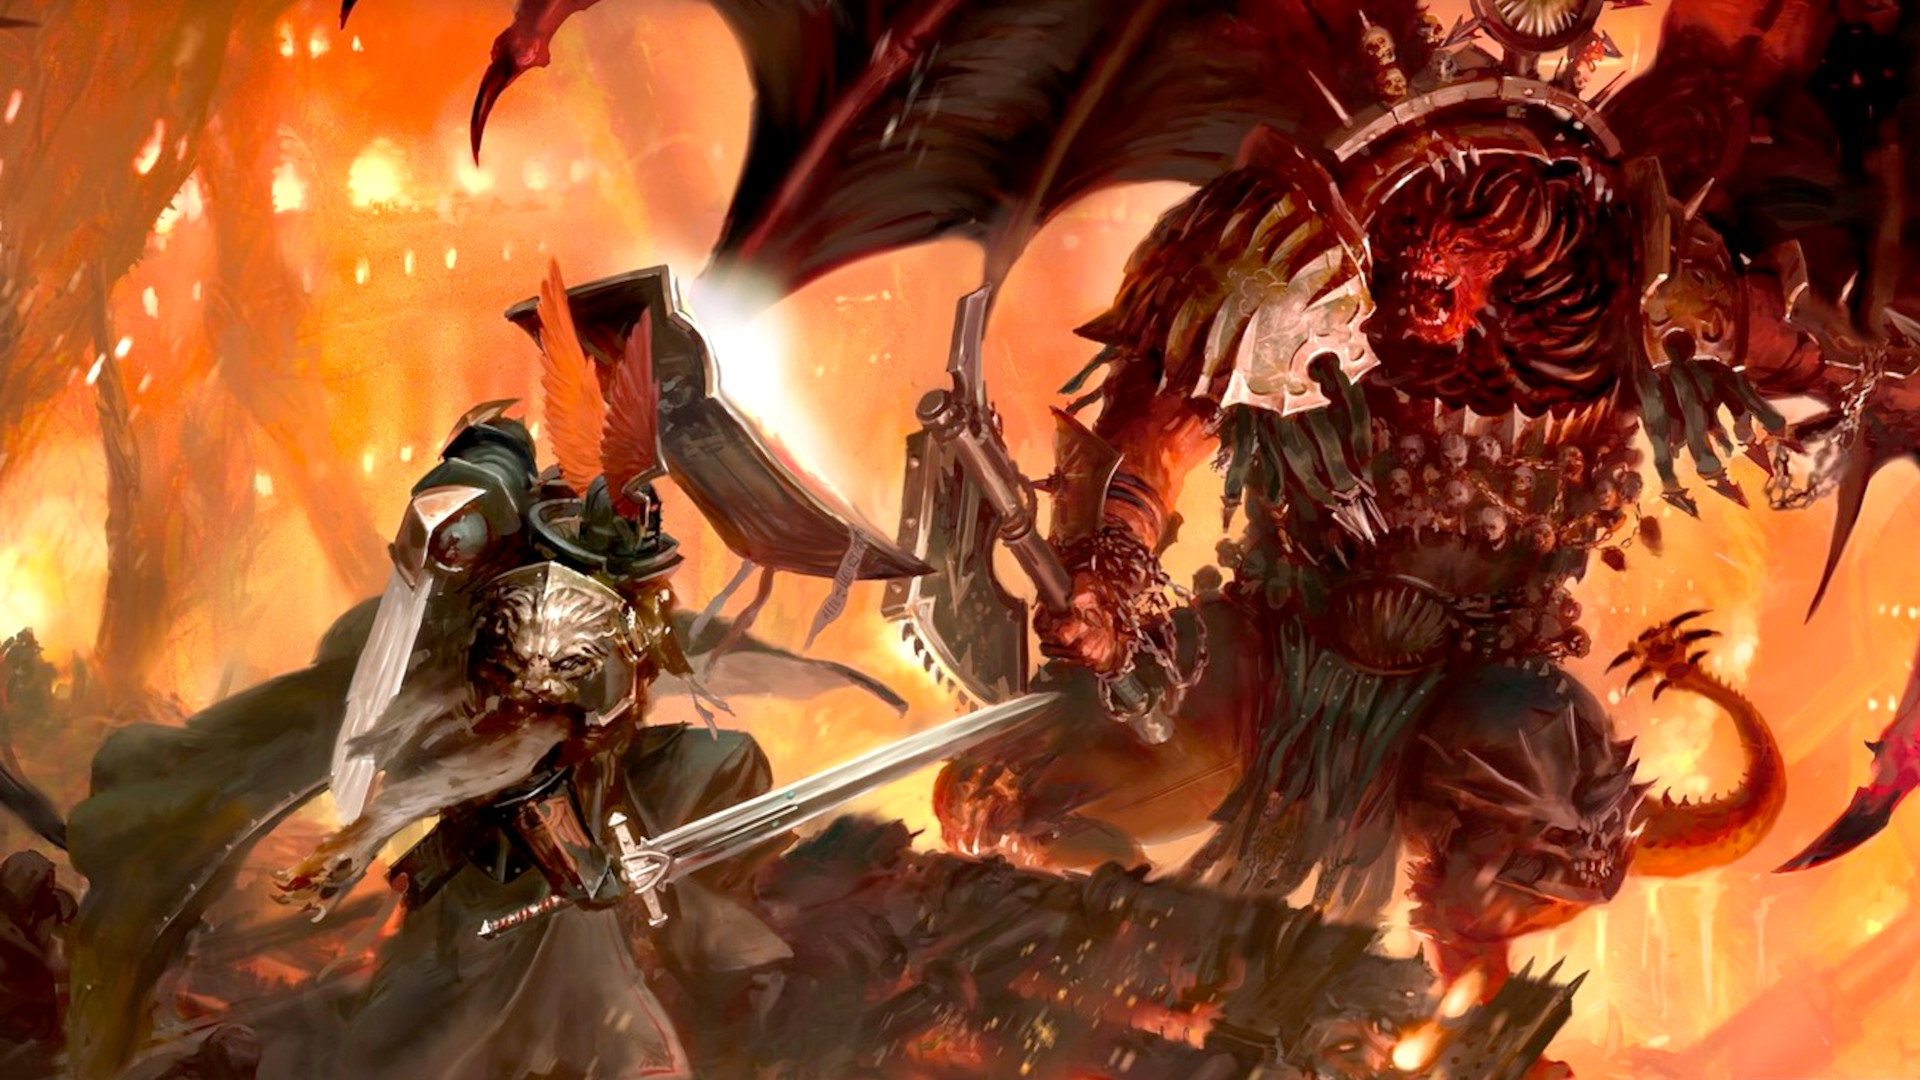 Warhammer 40k Lion El Jonson model Adepticon 2023 reveal - Warhammer Community artwork showing Lion El Jonson battling Angron face to face